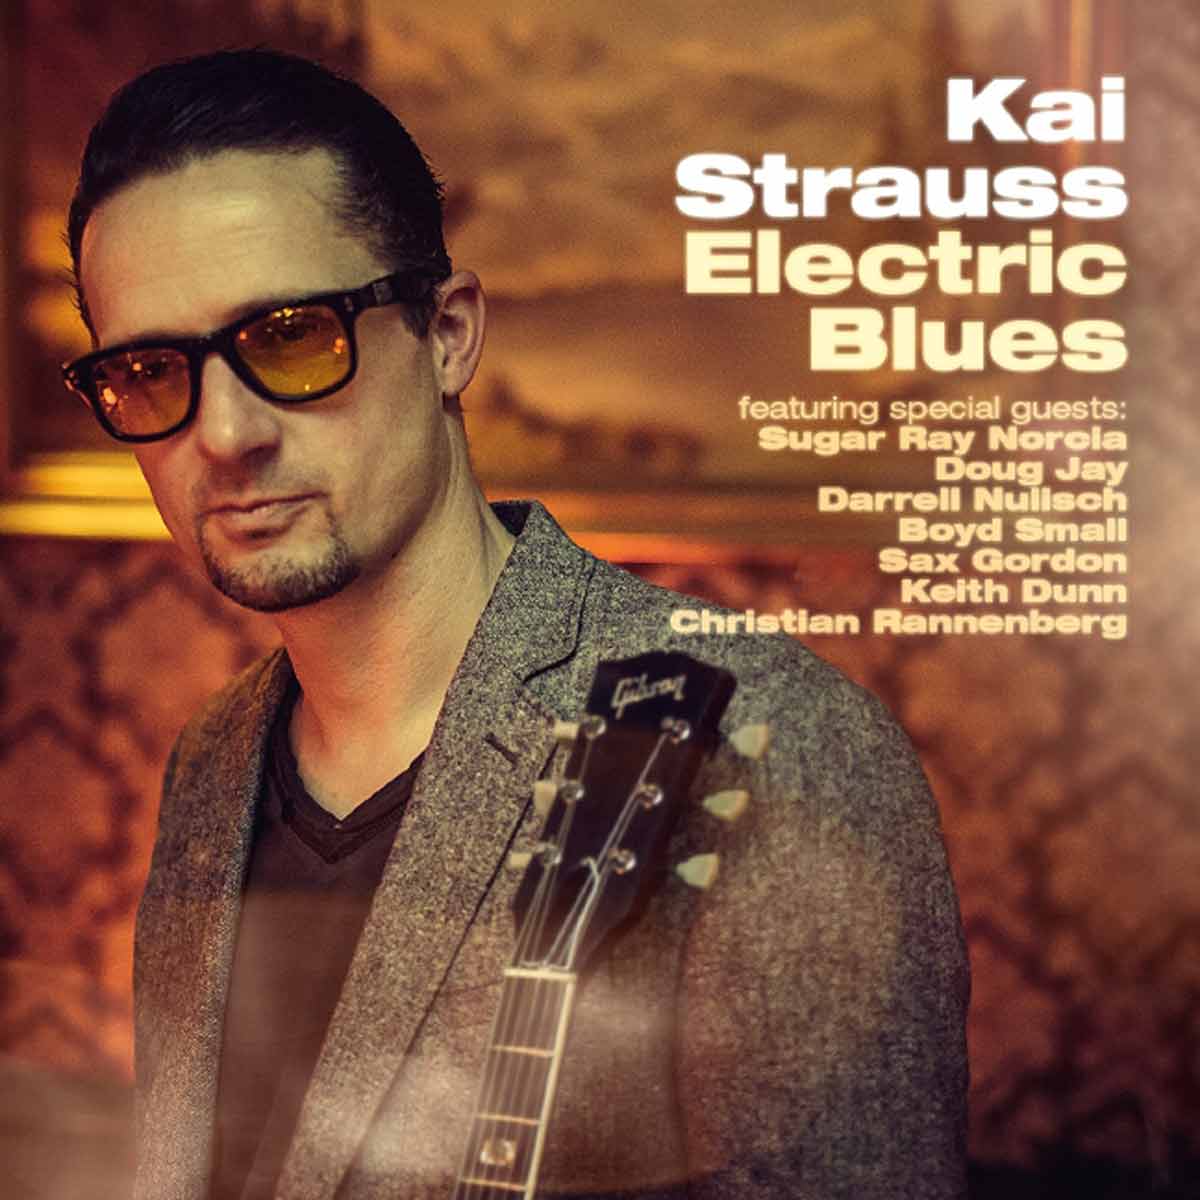 Electric Blues